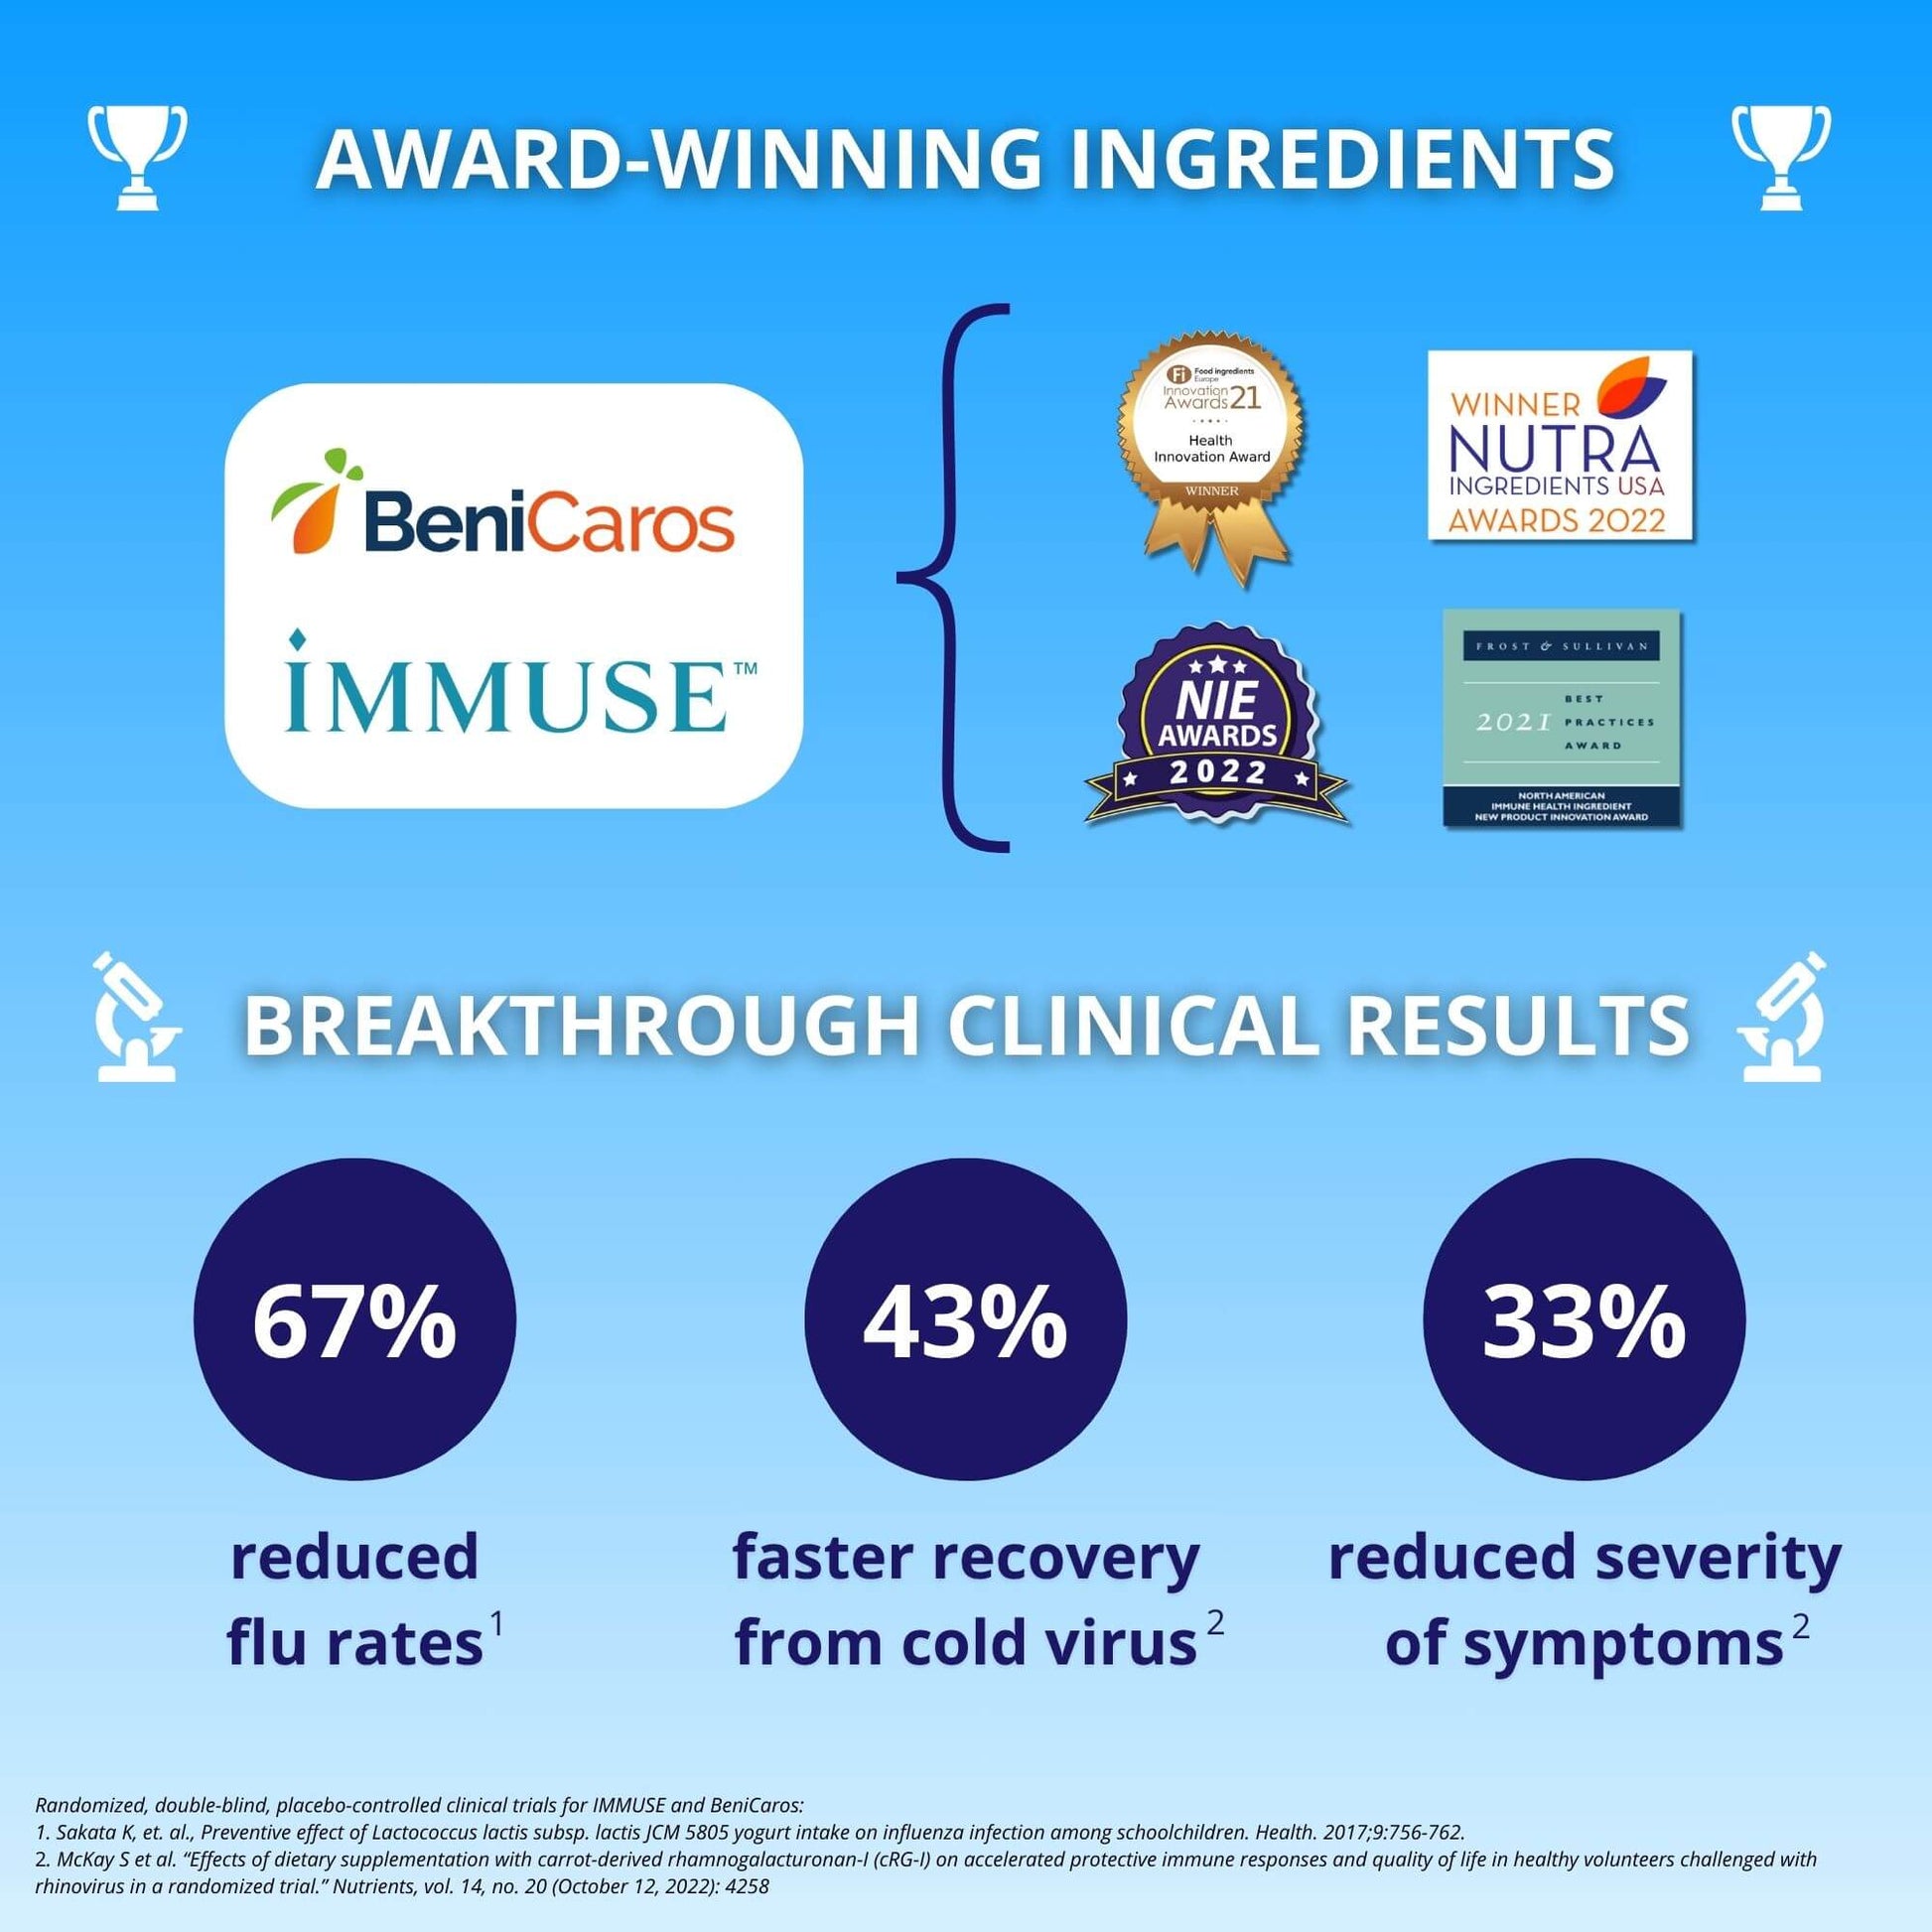 award-winning ingredients benicaros immuse breakthrough clinical results